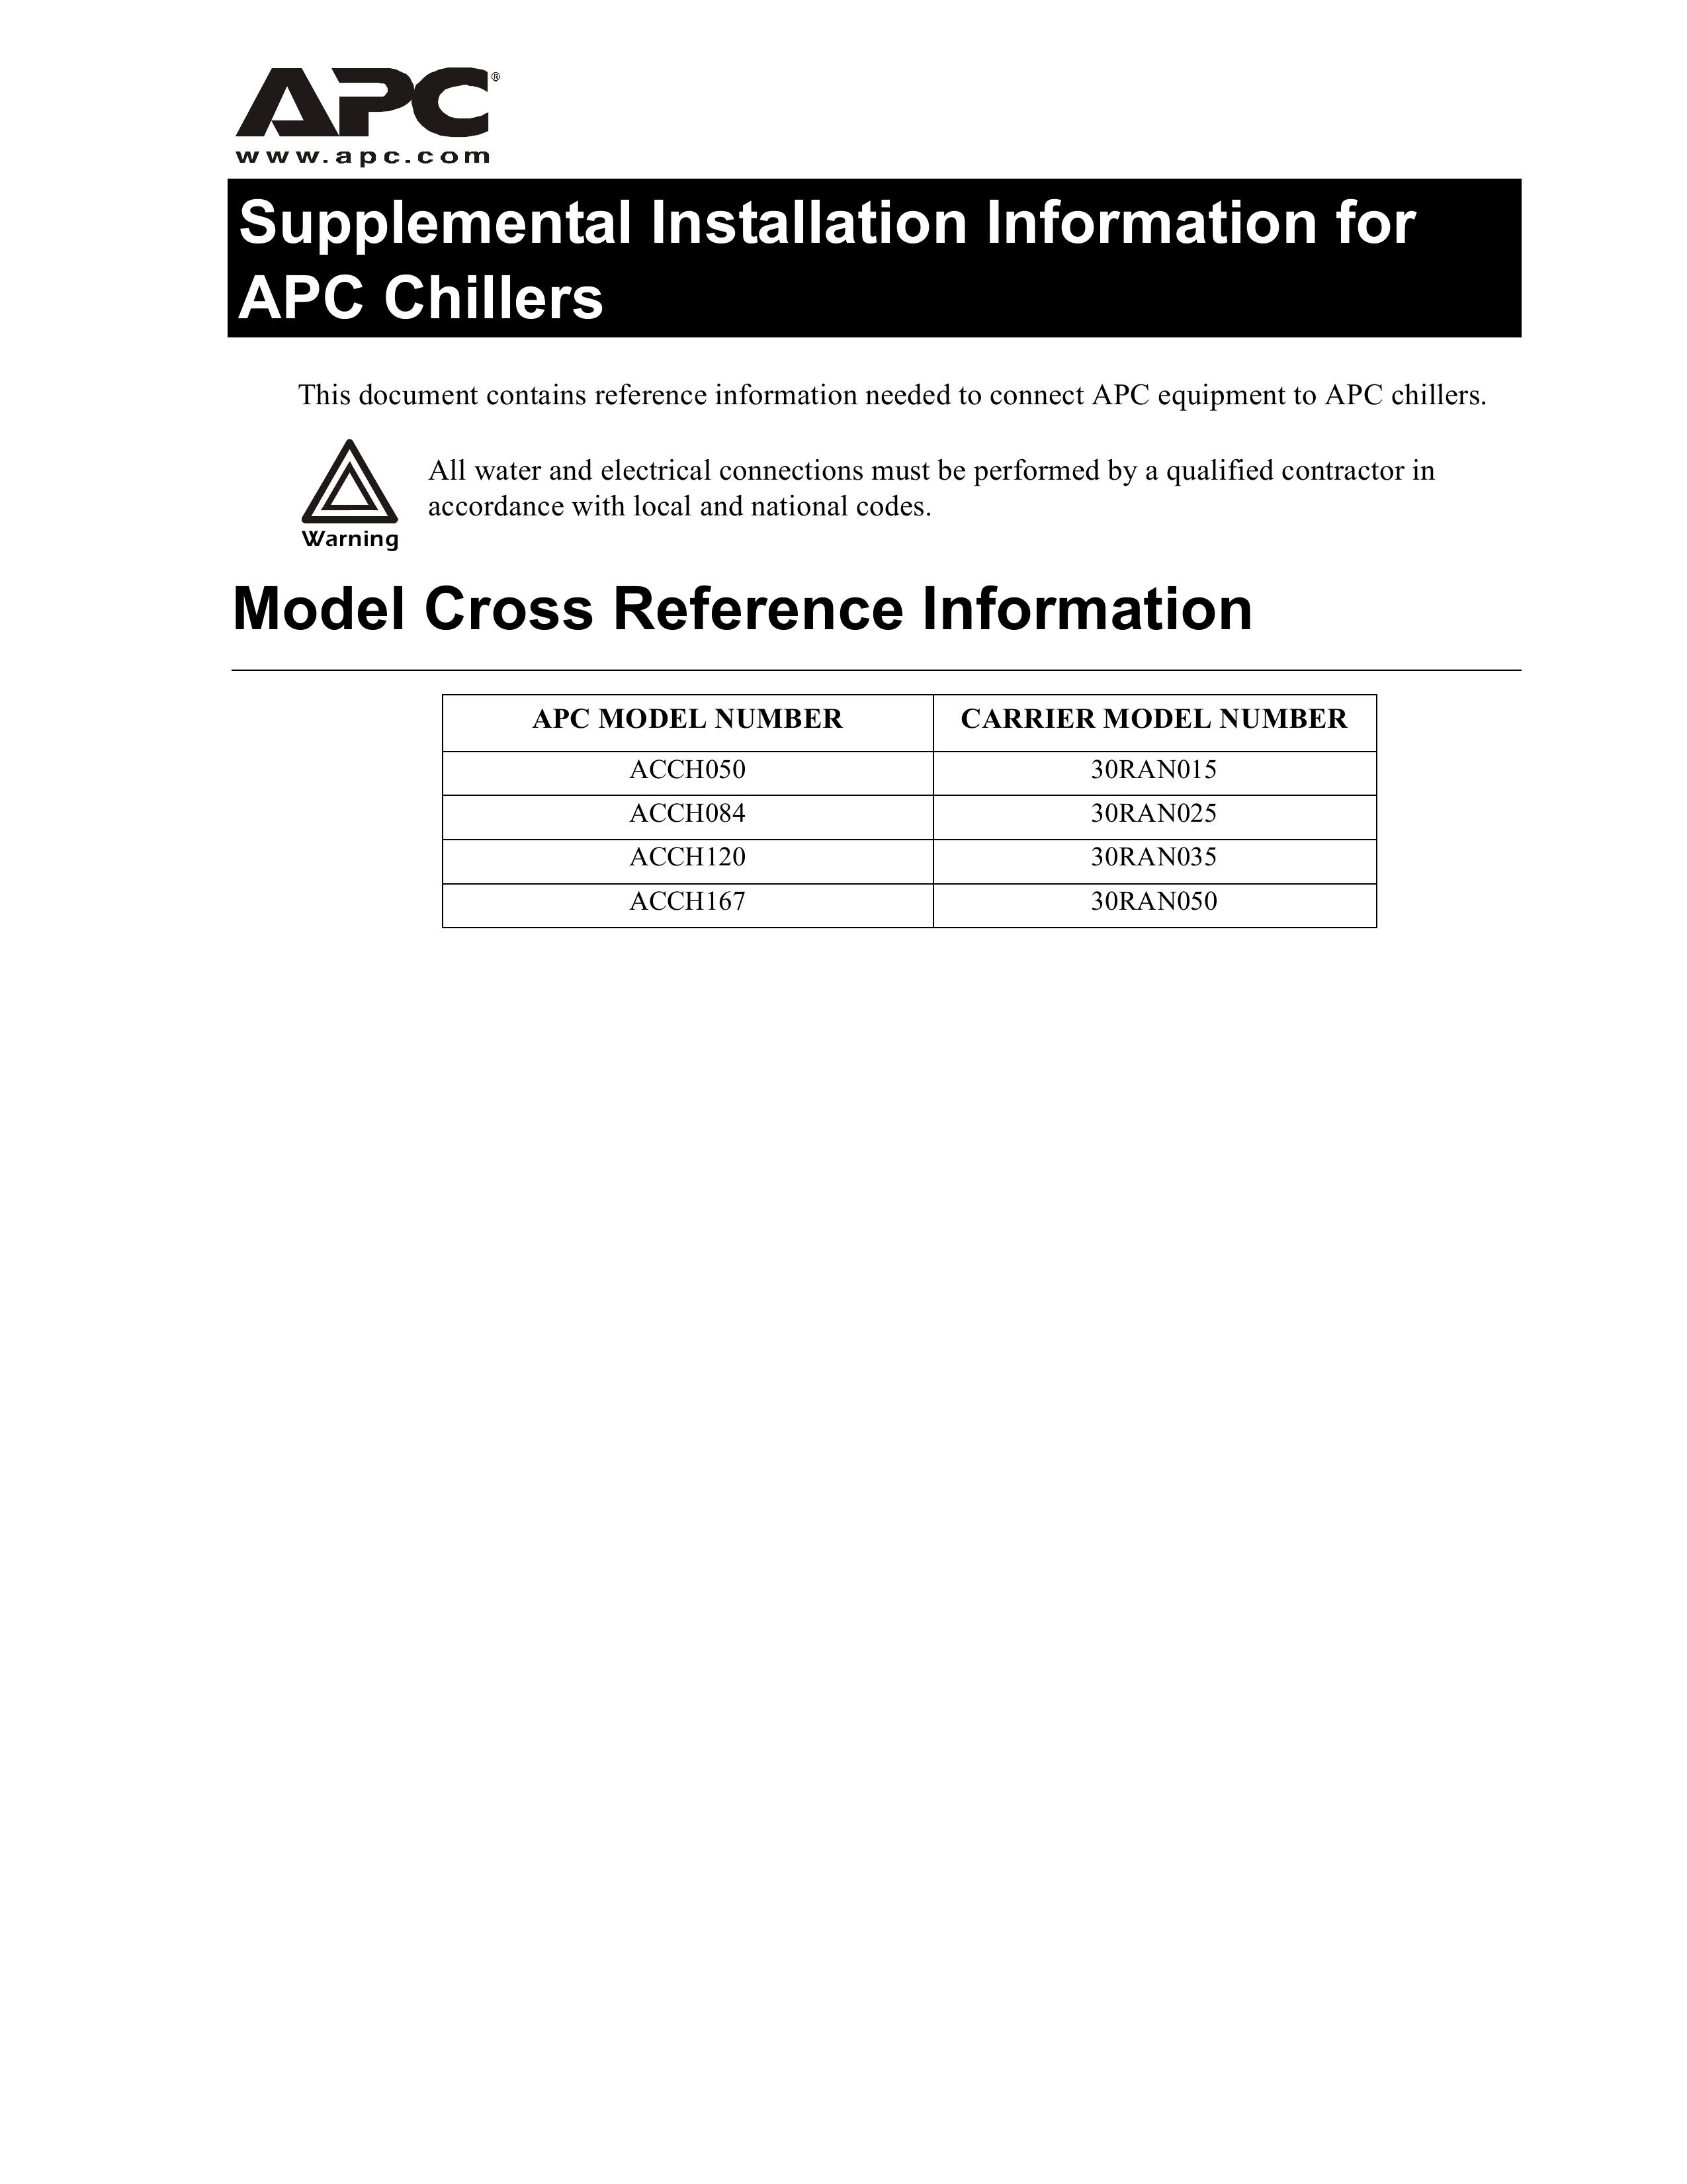 American Power Conversion ACCH084 Refrigerator User Manual